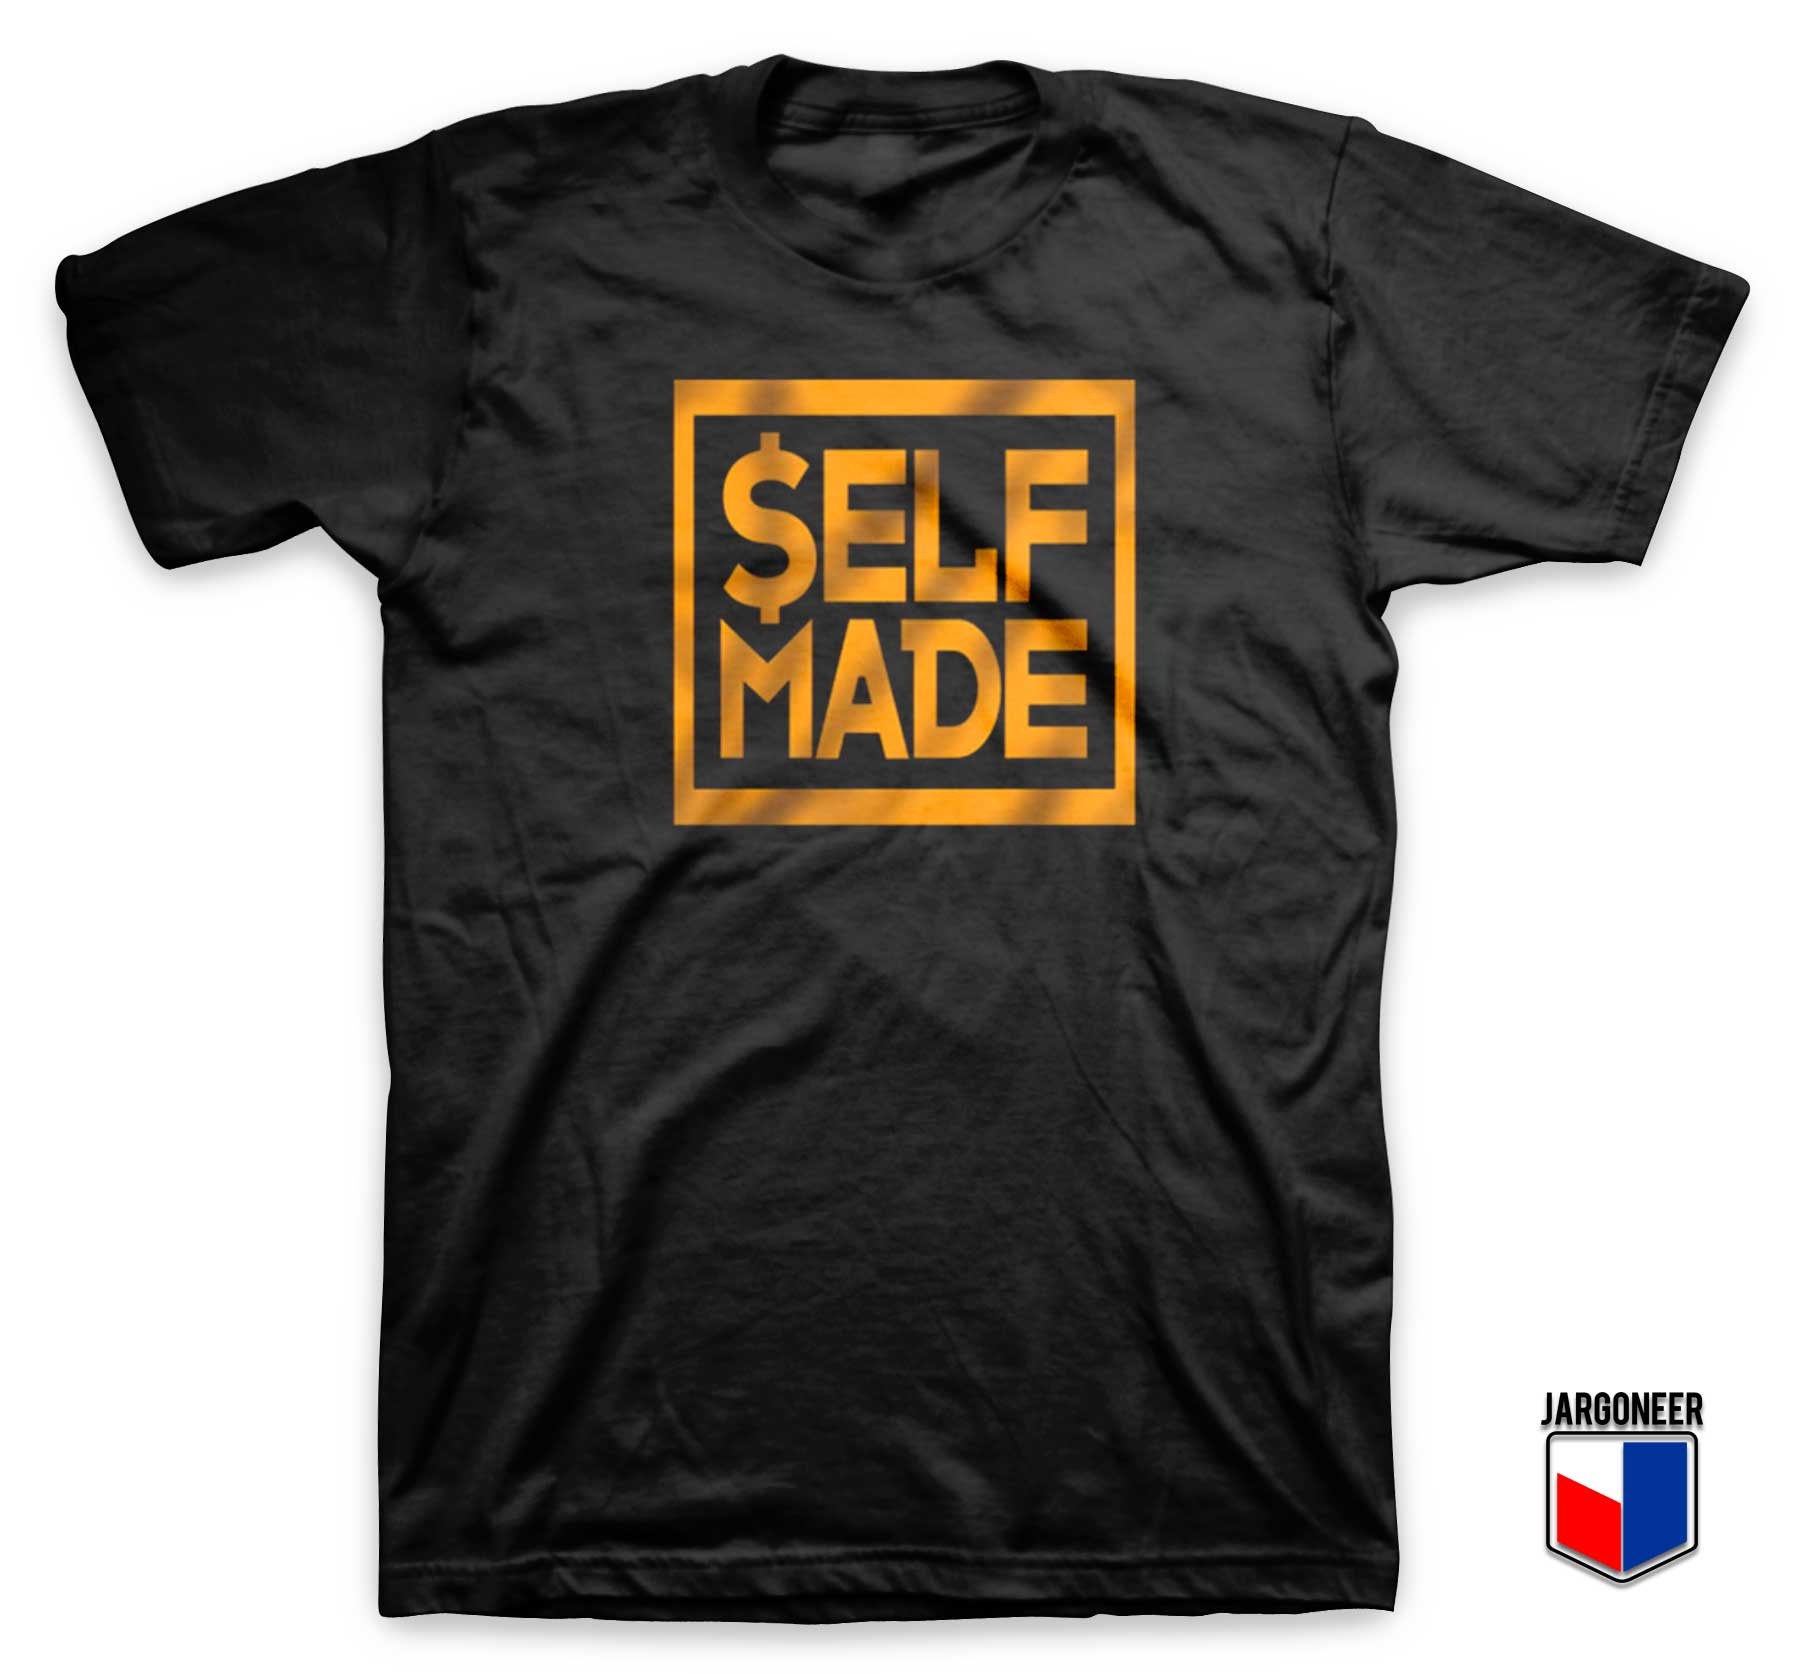 Self Made Rick Ross T Shirt - Shop Unique Graphic Cool Shirt Designs